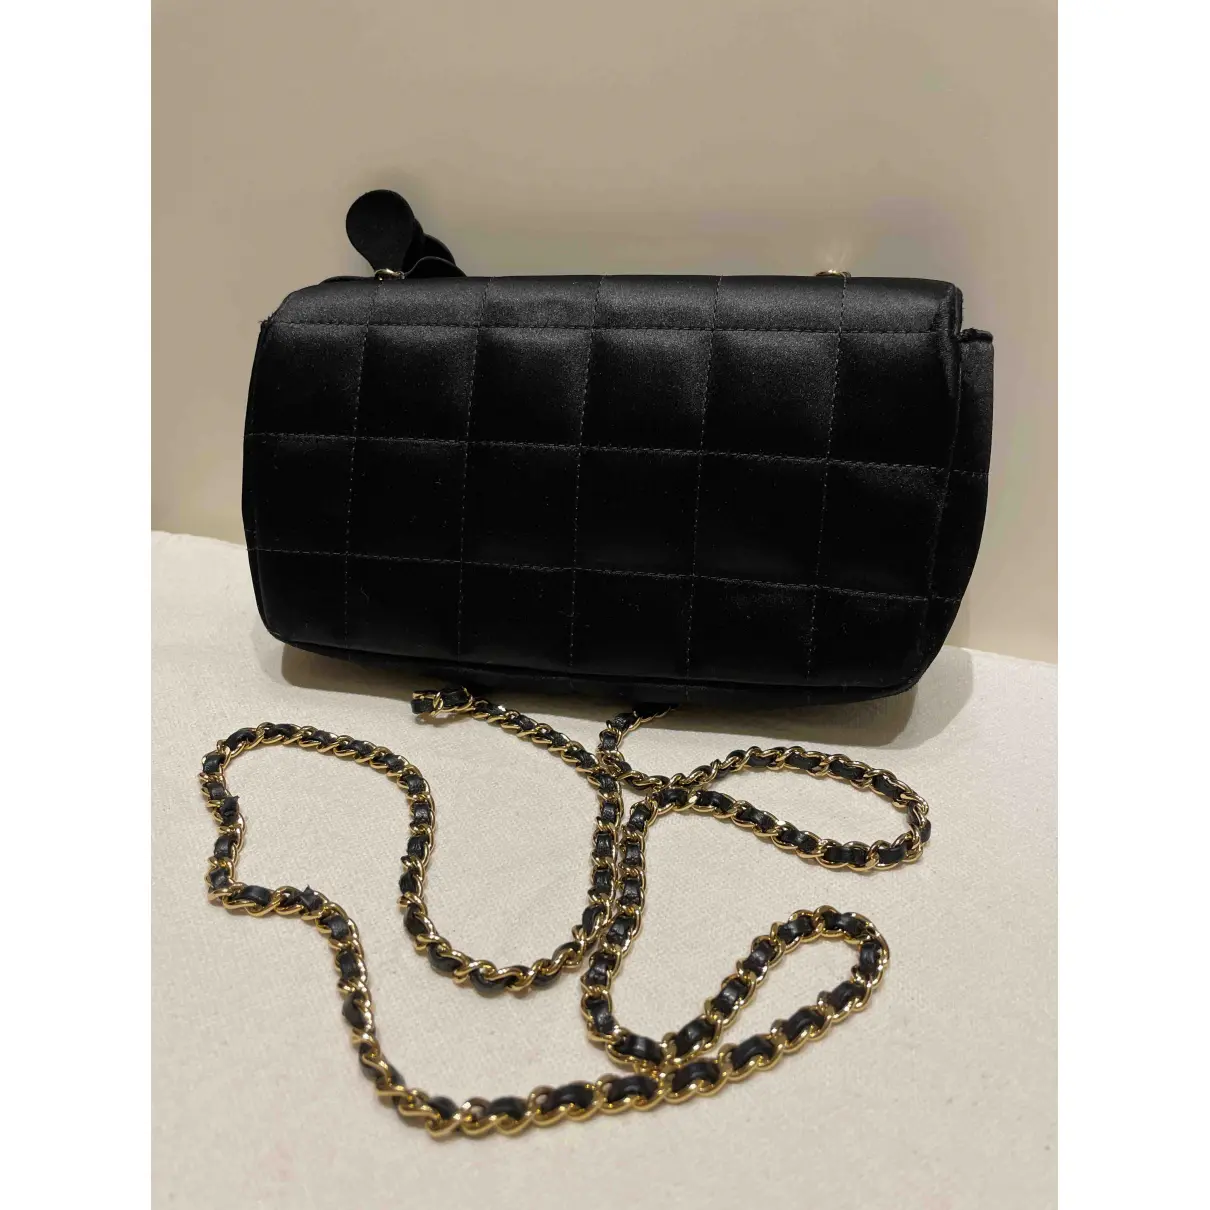 Buy Chanel East West Chocolate Bar silk handbag online